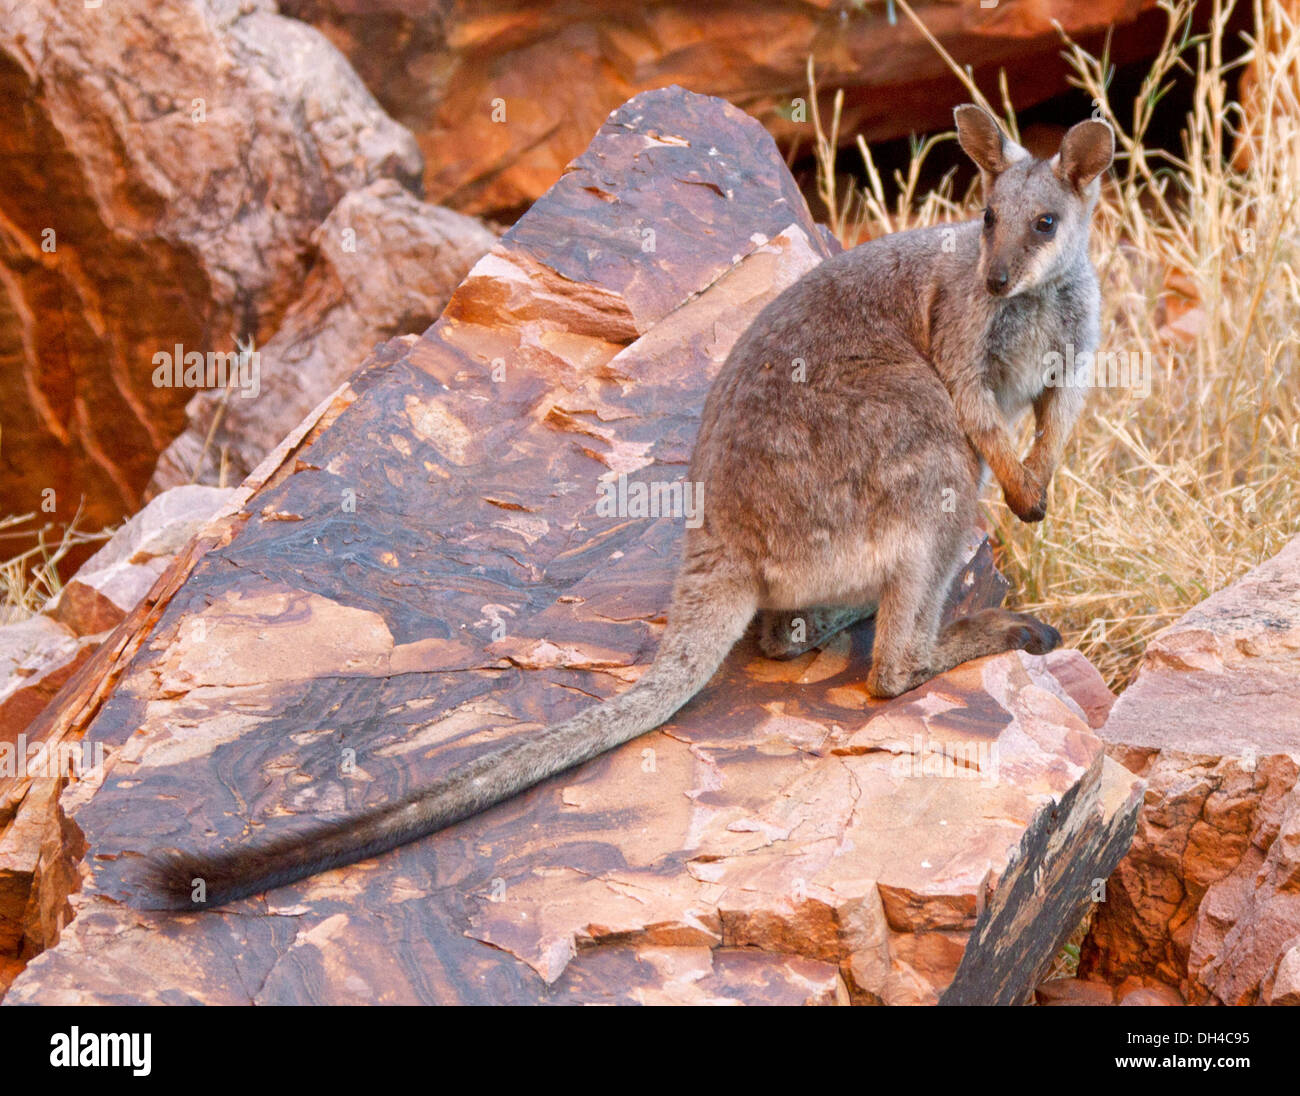 Selten schwarz-footed Rock Wallaby Petrogale Lateralis auf Felsen in freier Wildbahn bei Simpsons Gap in West MacDonnell Ranges in der Nähe von Alice Springs NT Australien Stockfoto